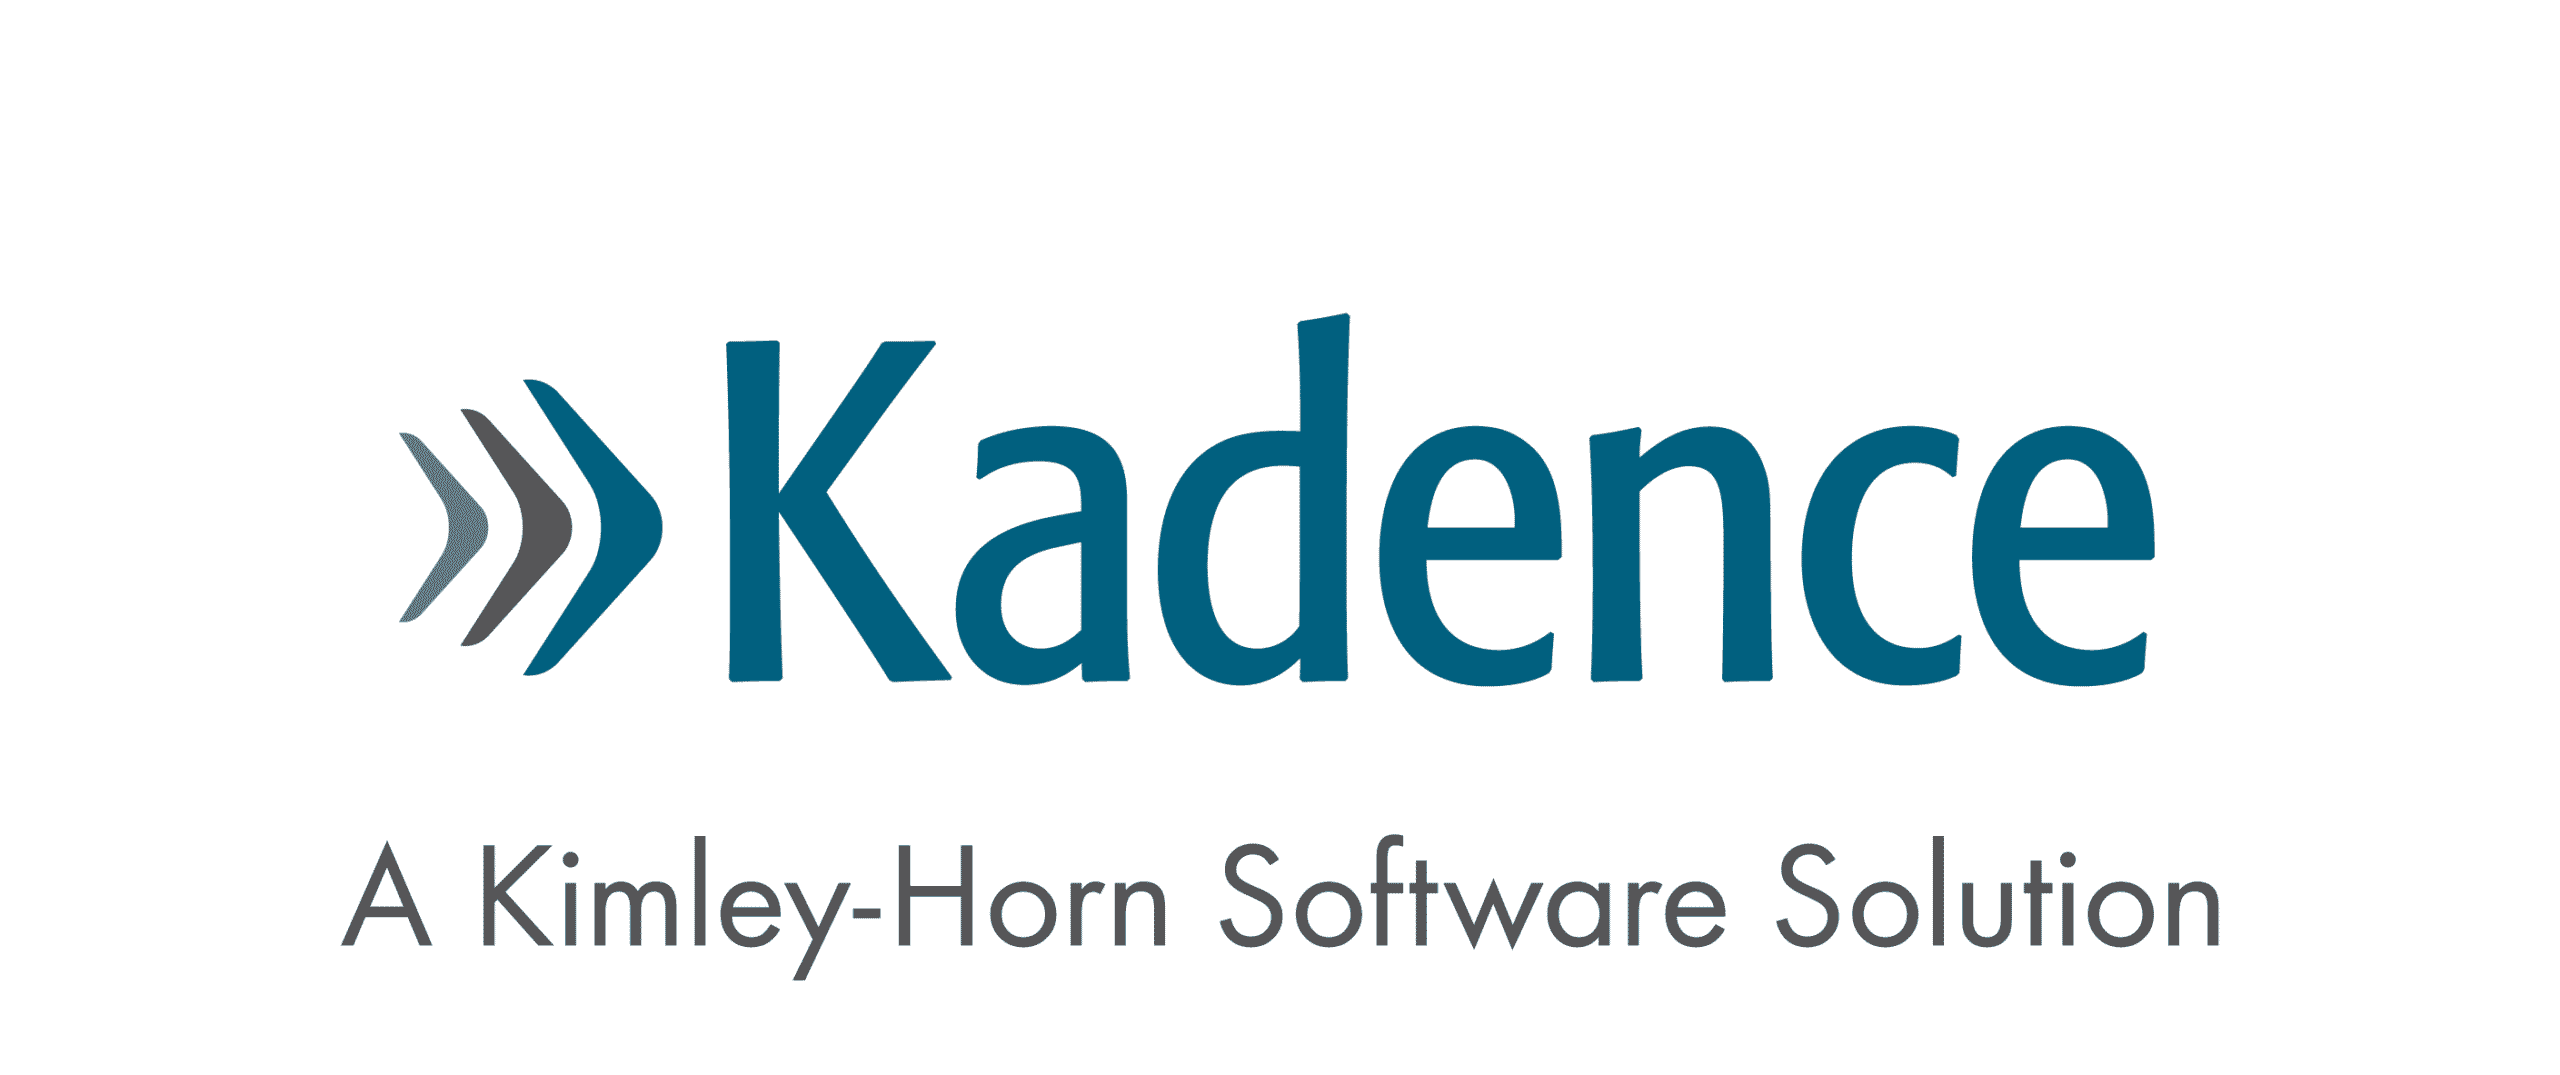 Kadence: A Kimley-Horn Software Solution